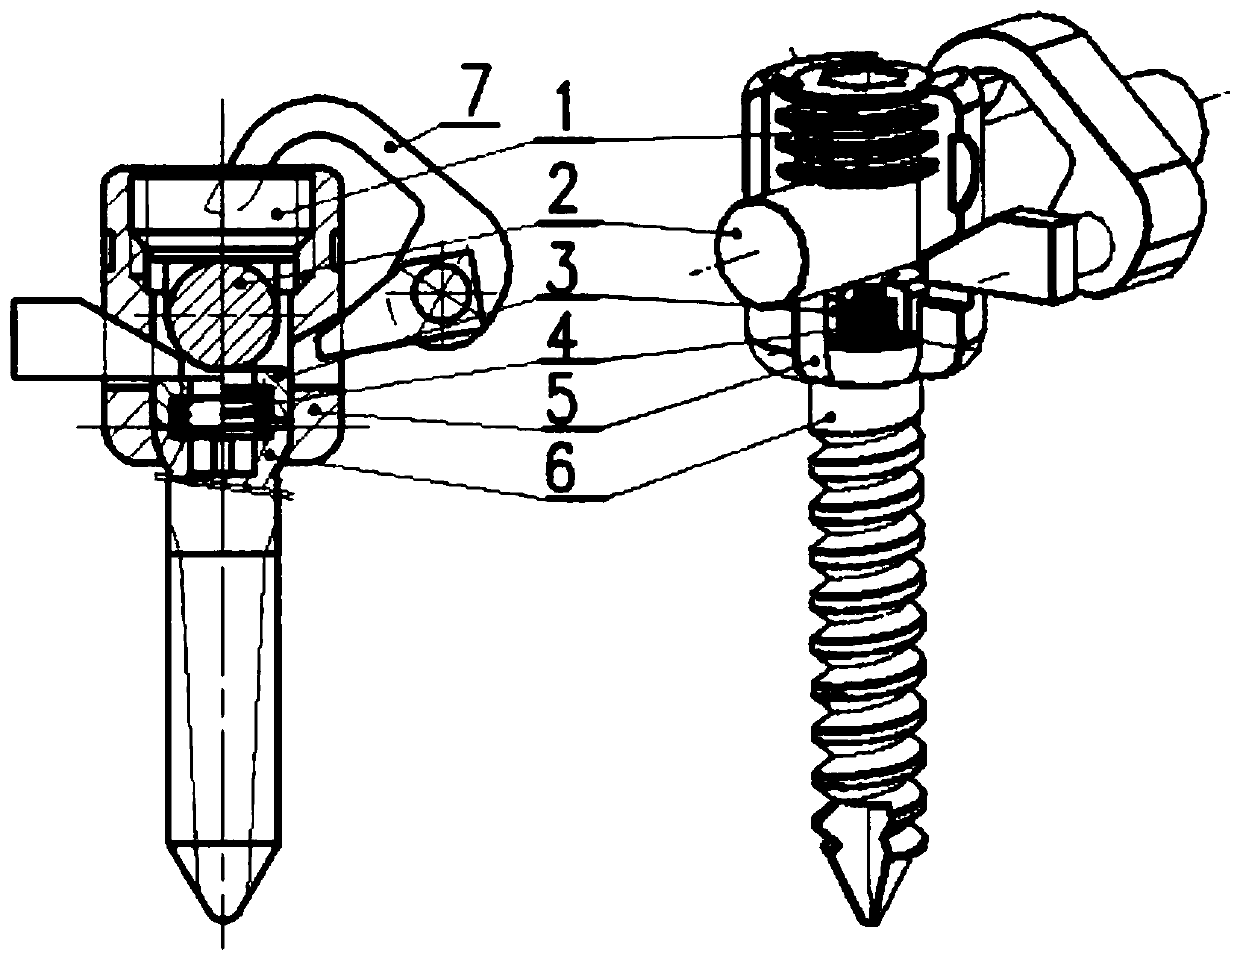 Dynamic pedicle screw neutral pressurization and limiting tool of dynamic pedicle screw